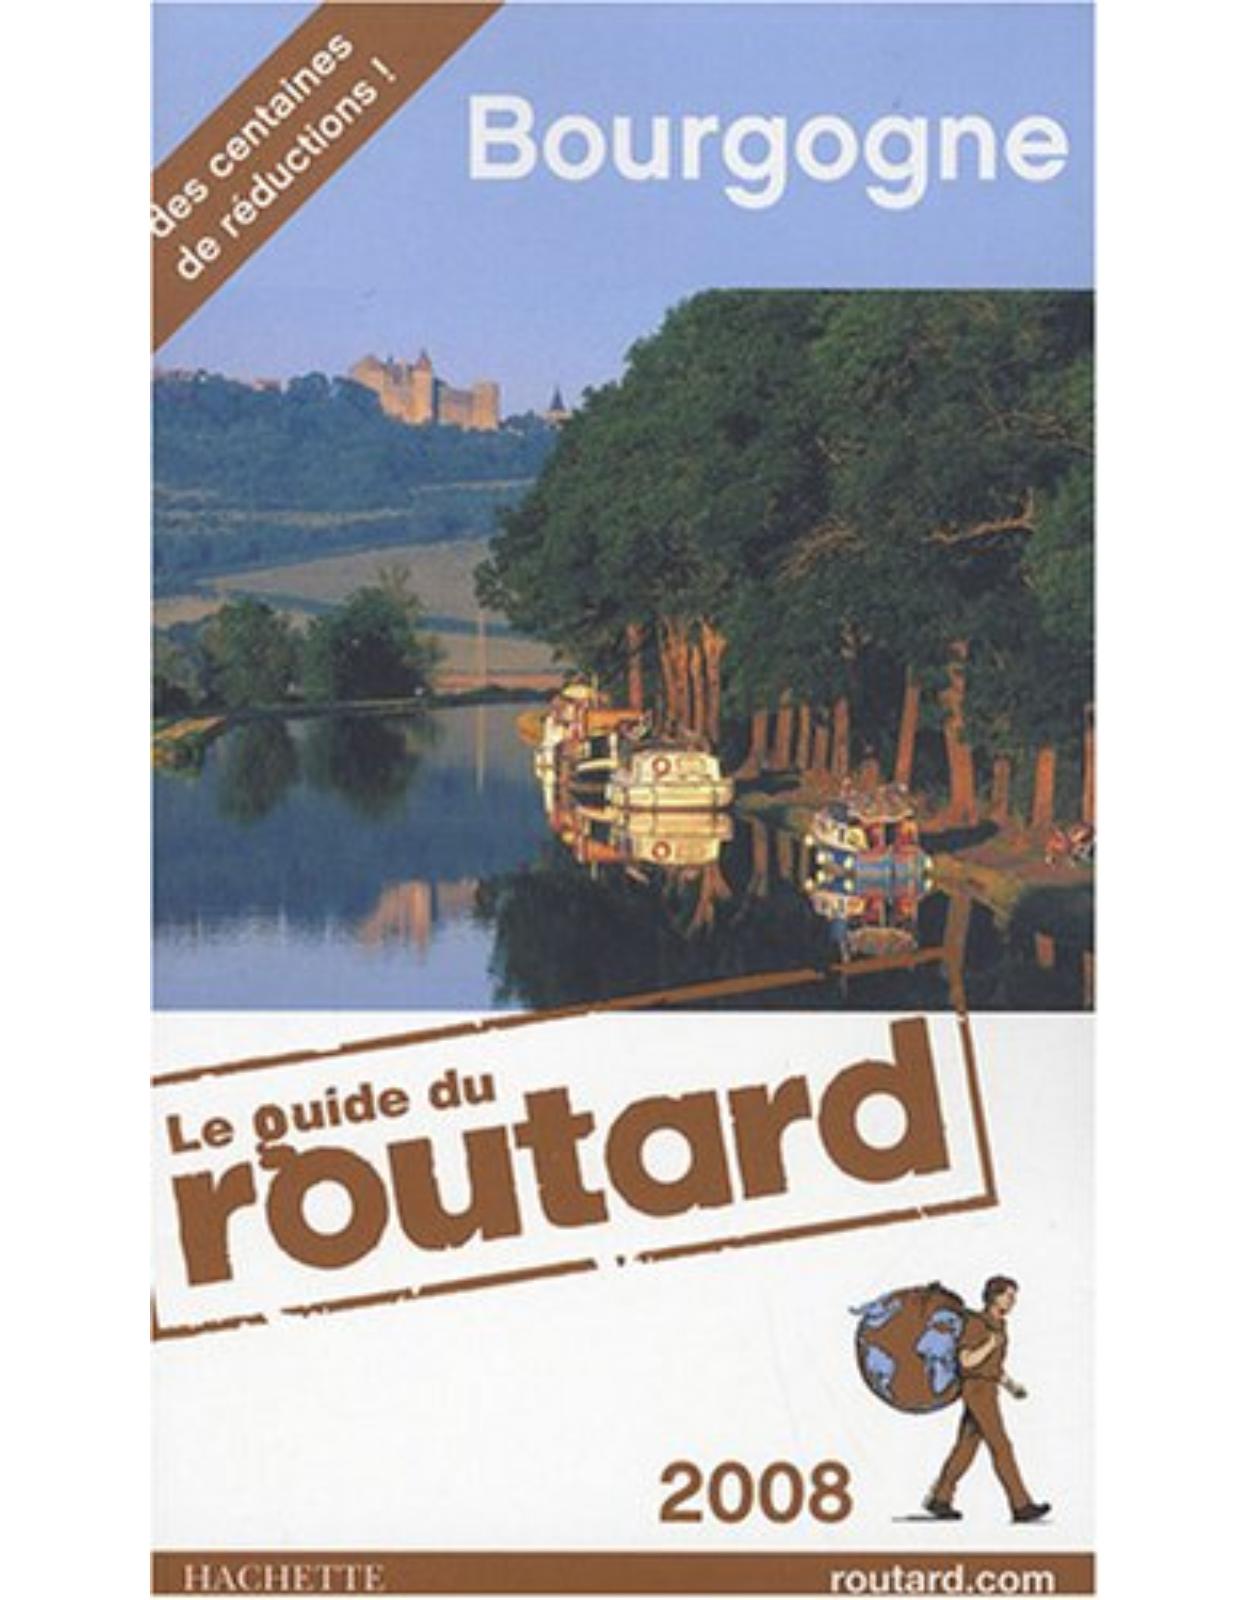 Le Guide du Routard - Bourgogne 2008